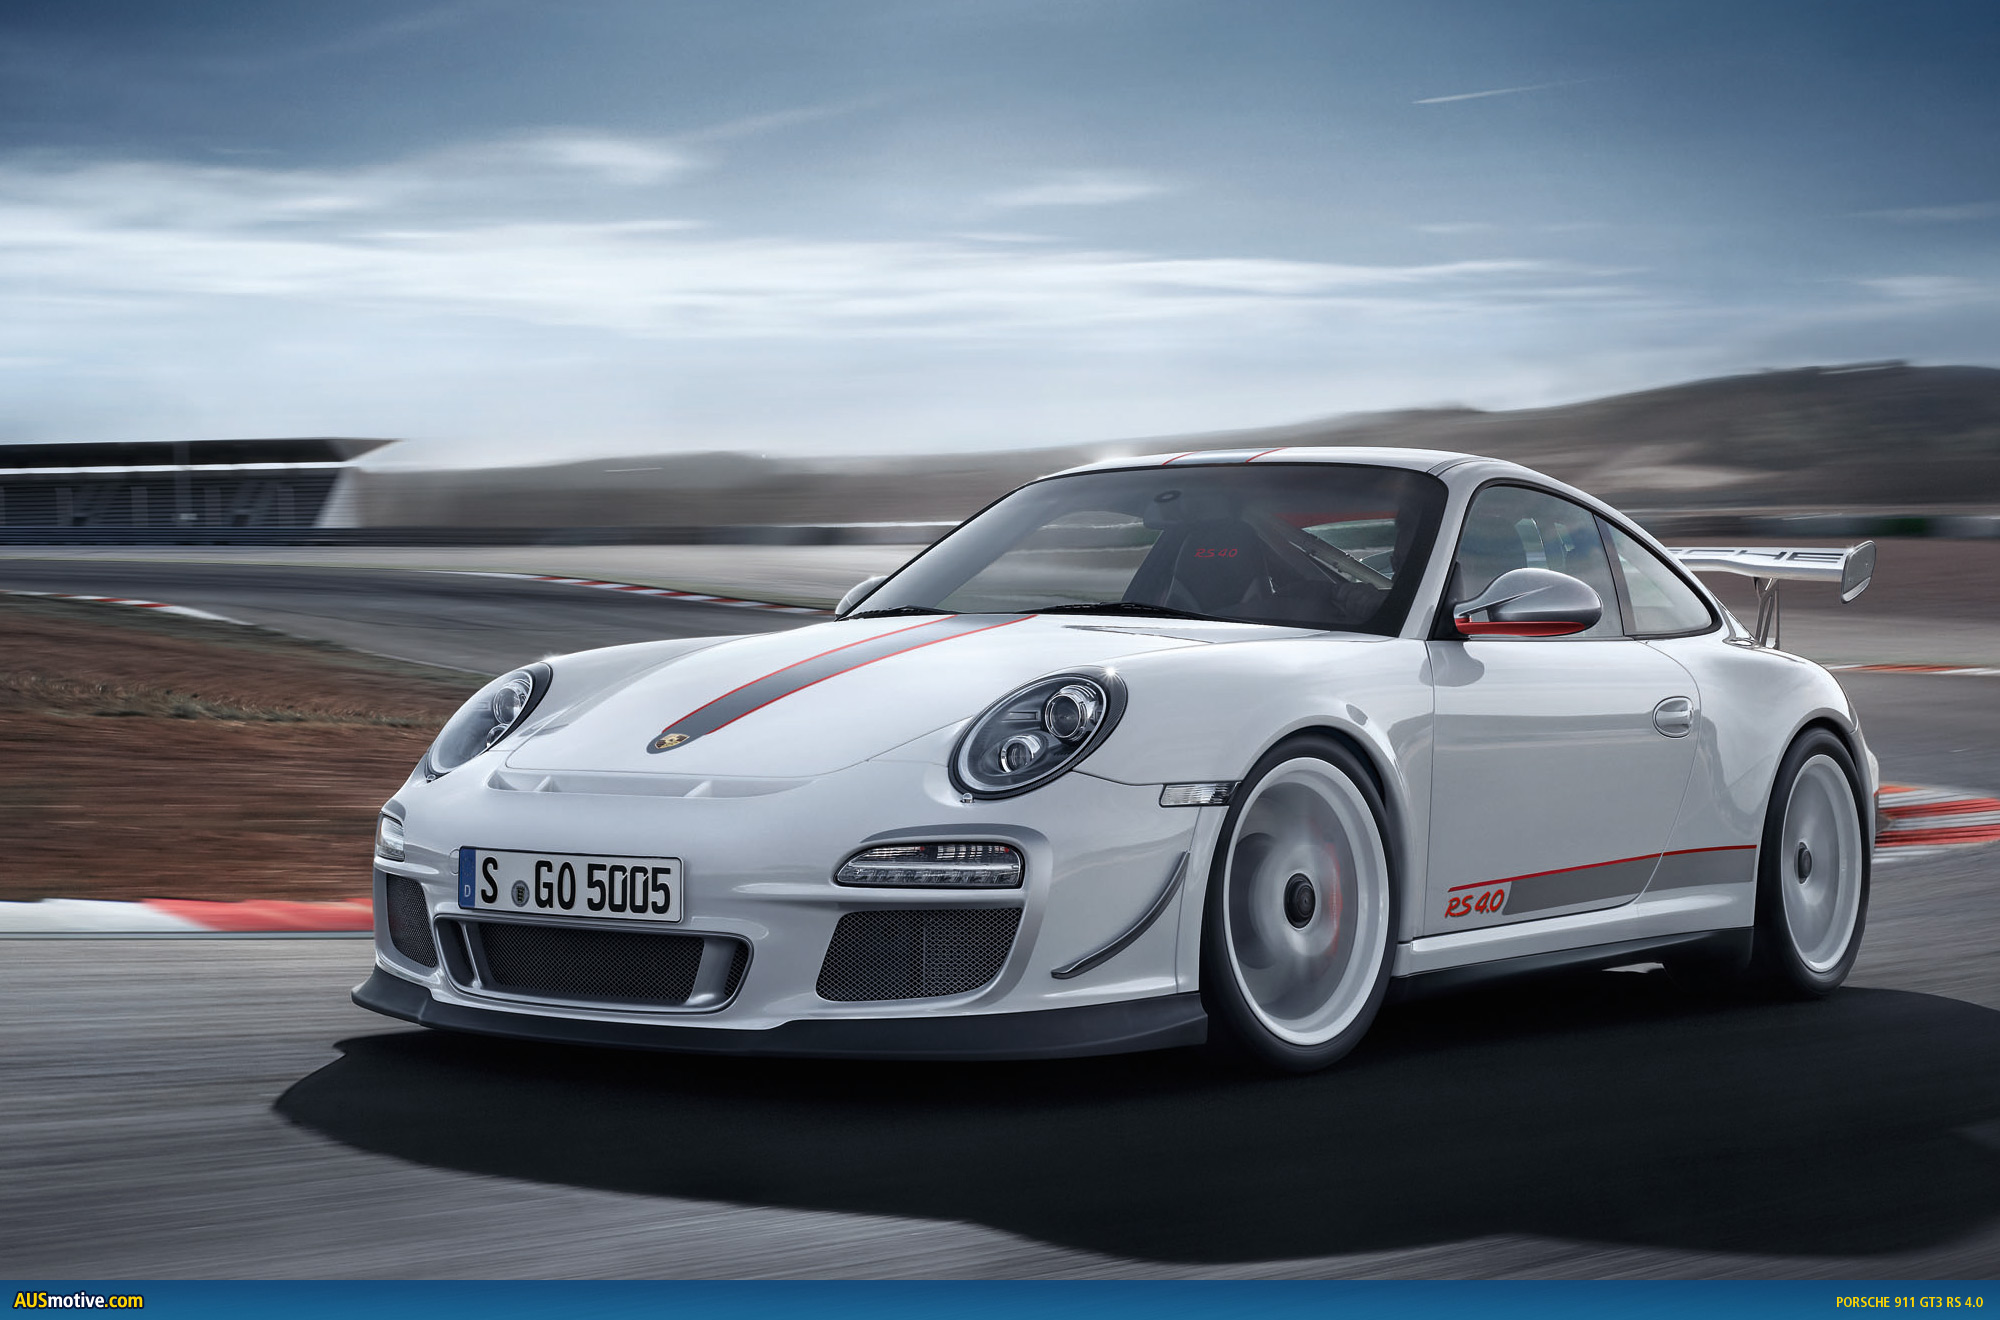 AUSmotive.com » OFFICIAL: Porsche 911 GT3 RS 4.0